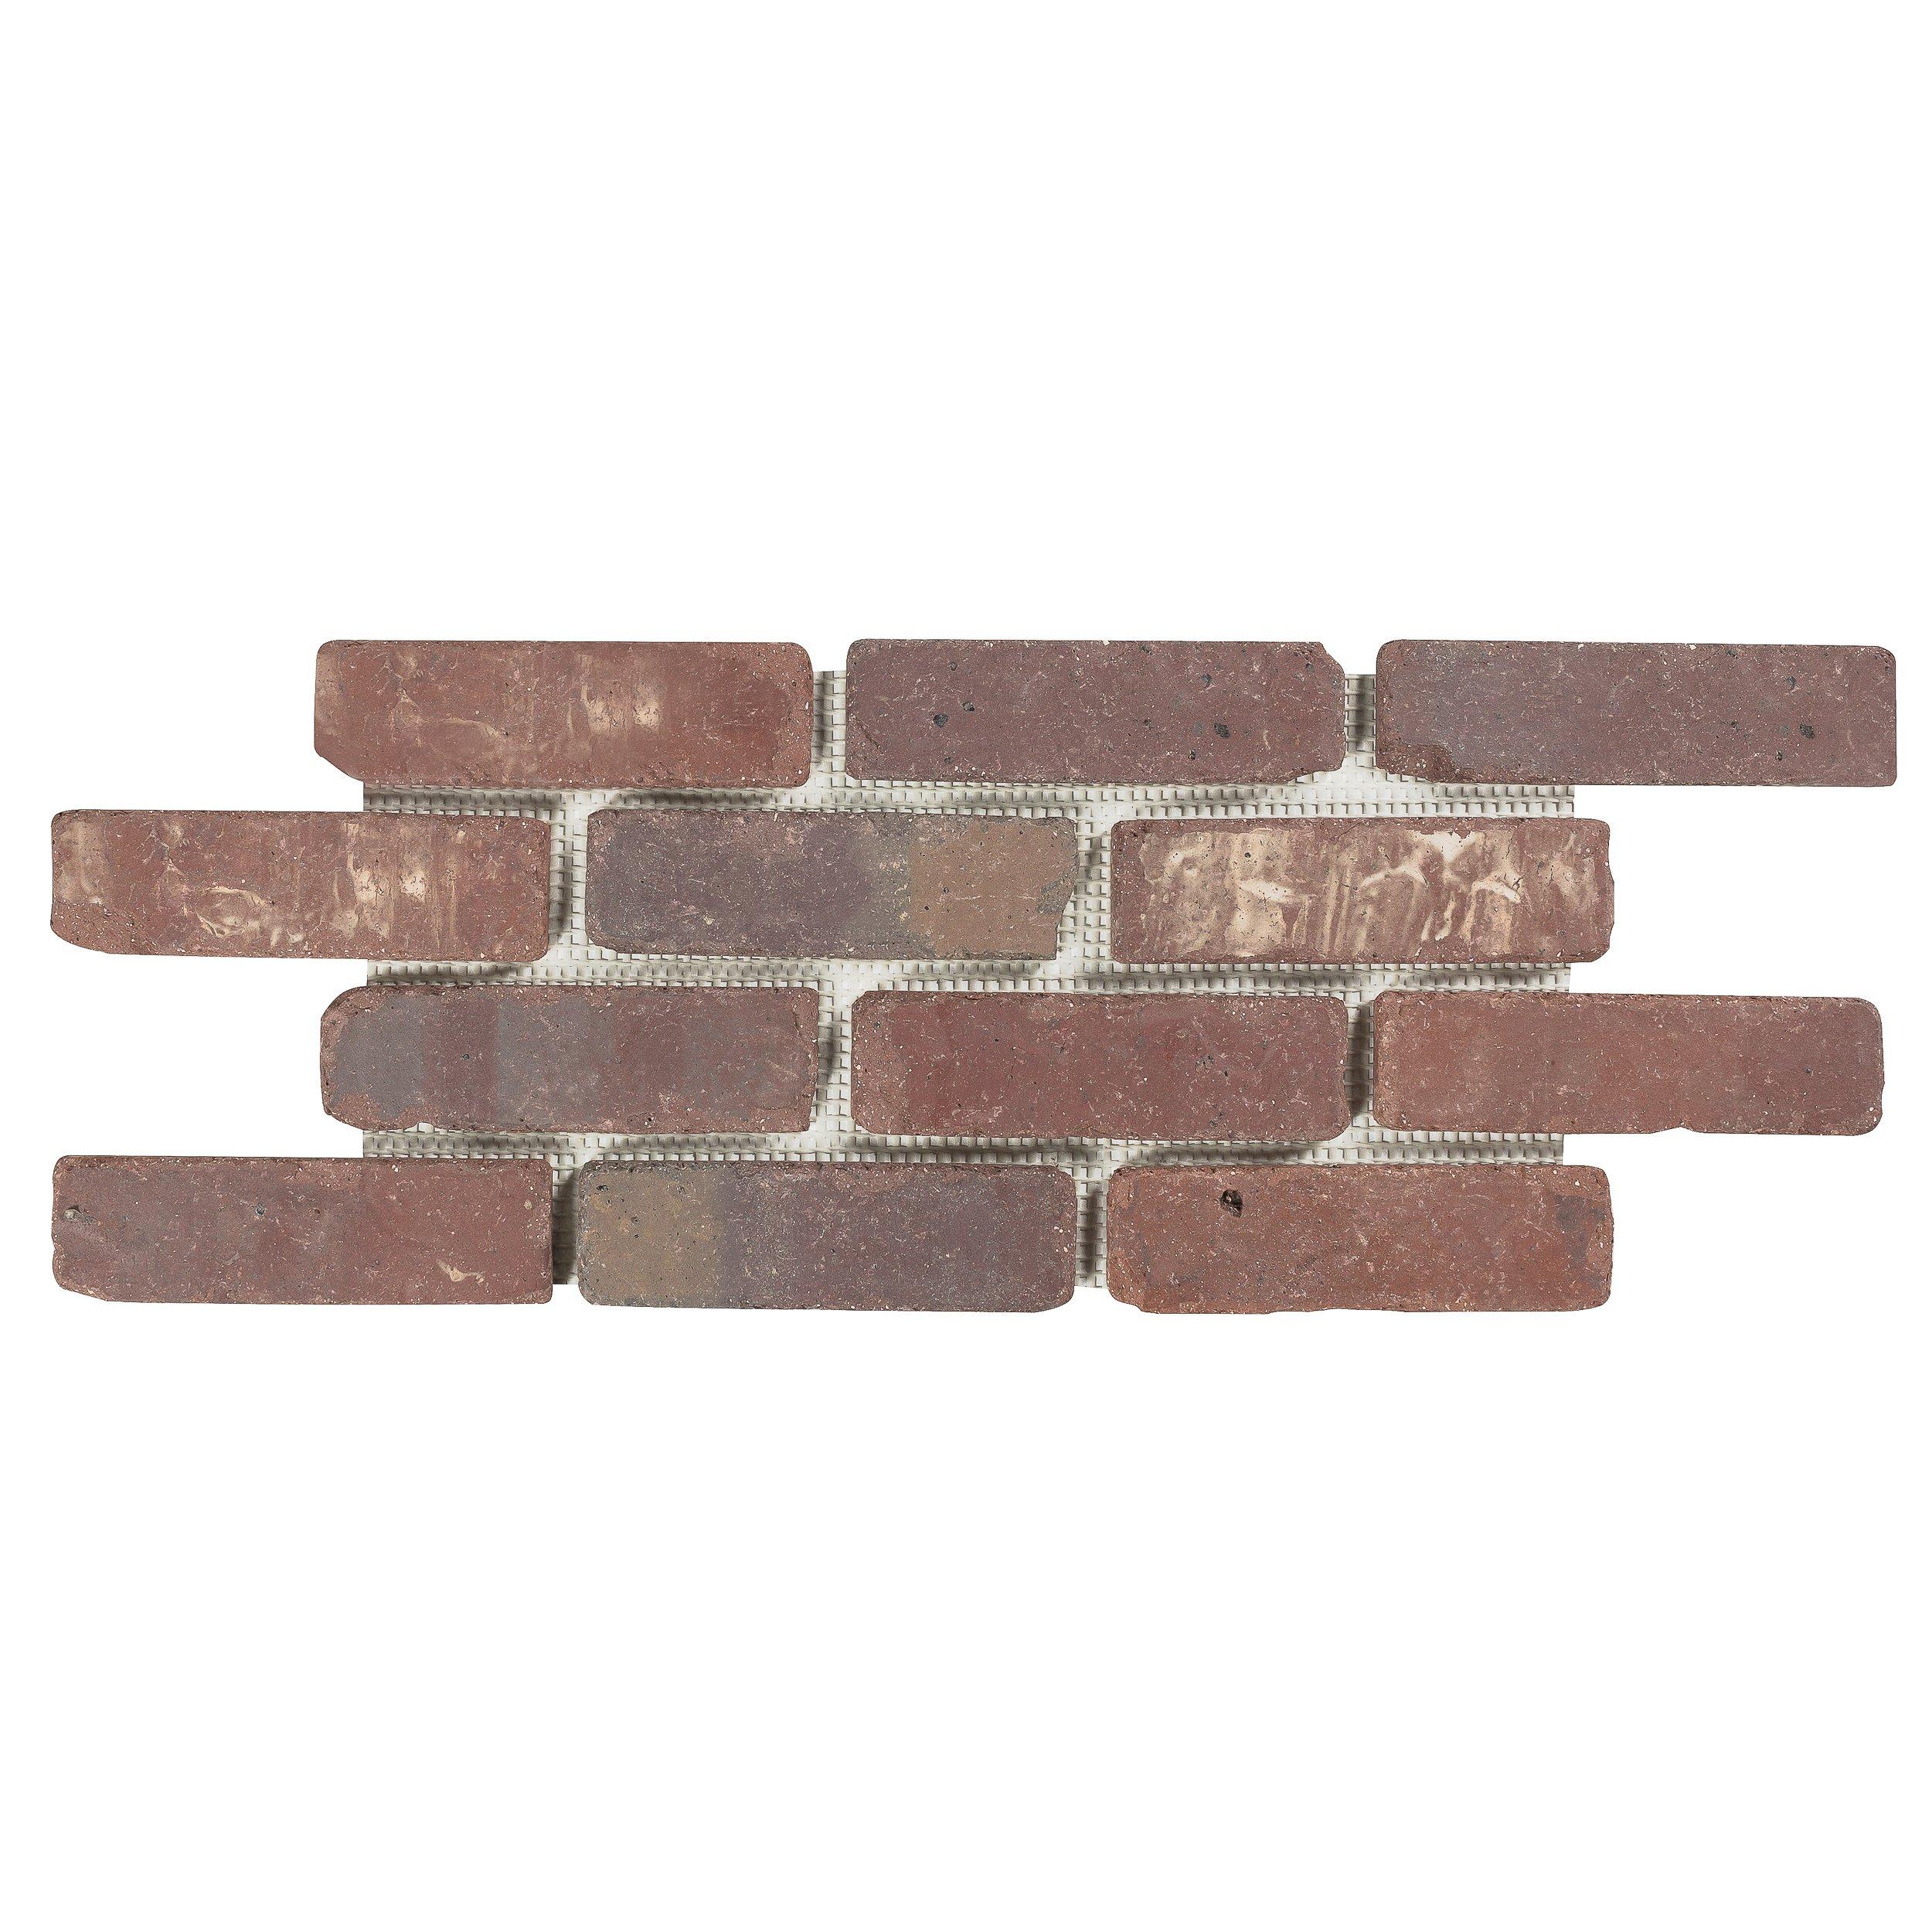 Rushmore Thin Brick Panel Ledger 10 X 28 100411677 Floor And Decor